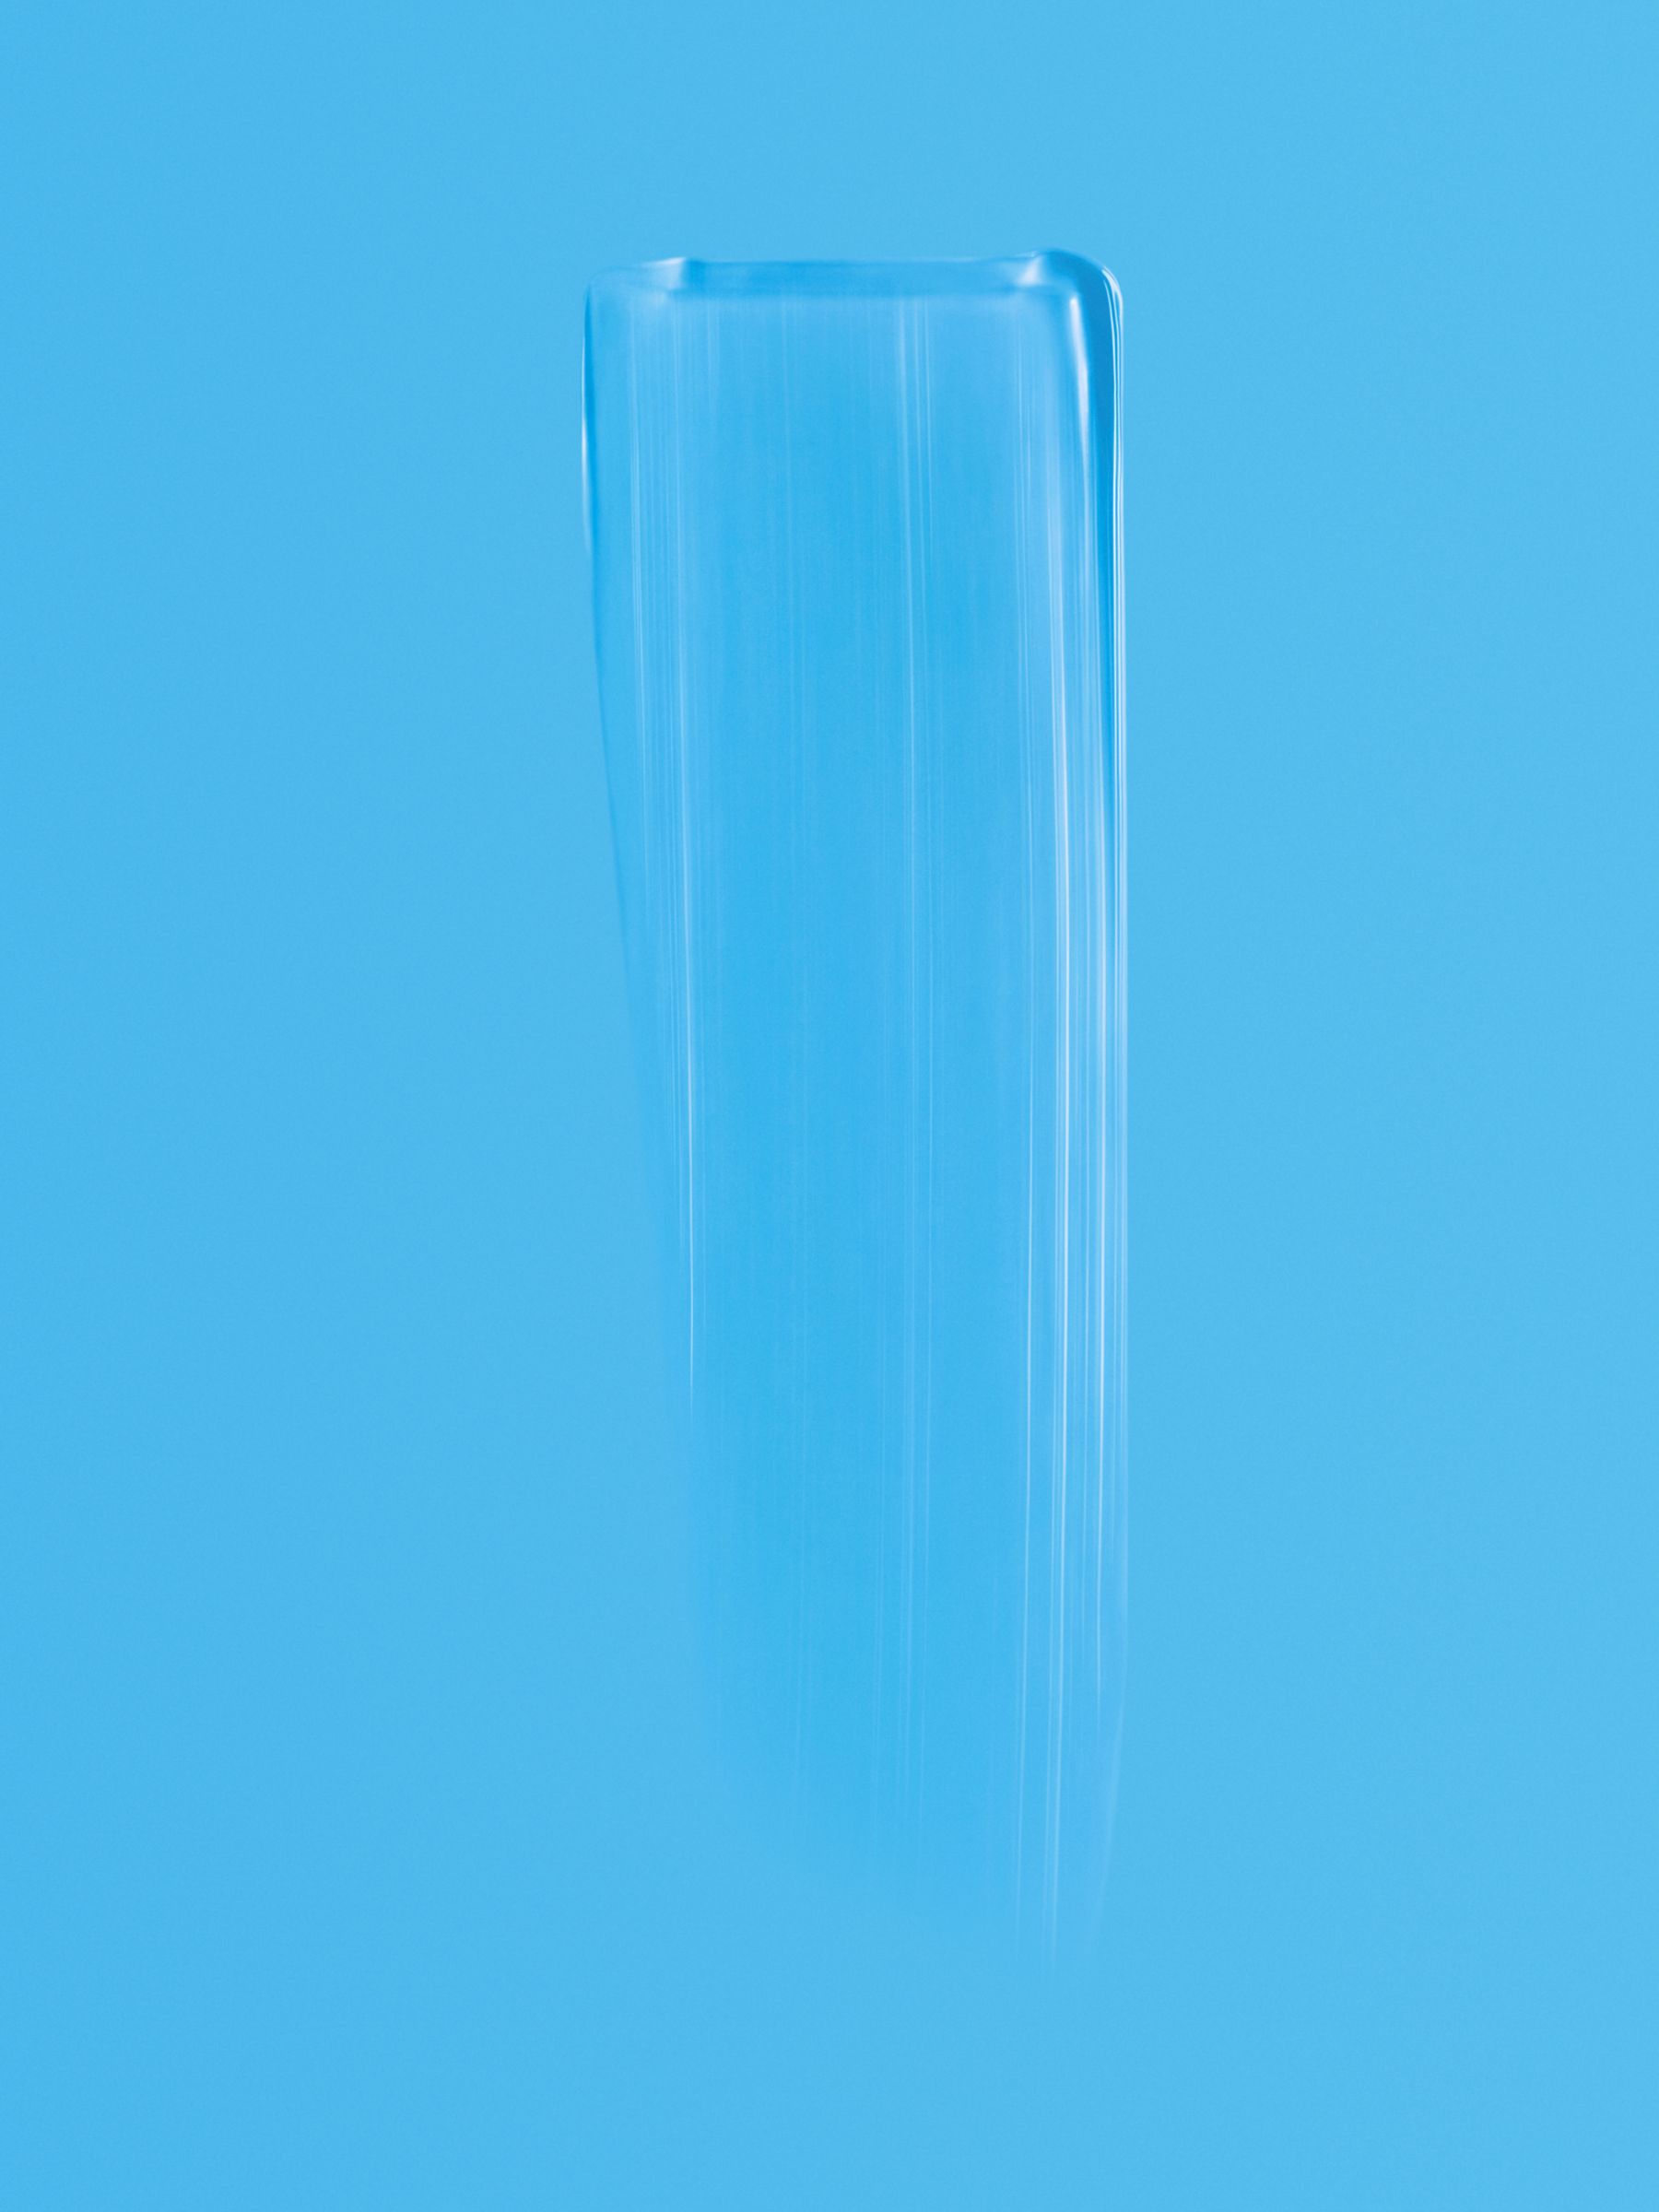 Shiseido Clear Suncare Stick SPF 50+, 20g